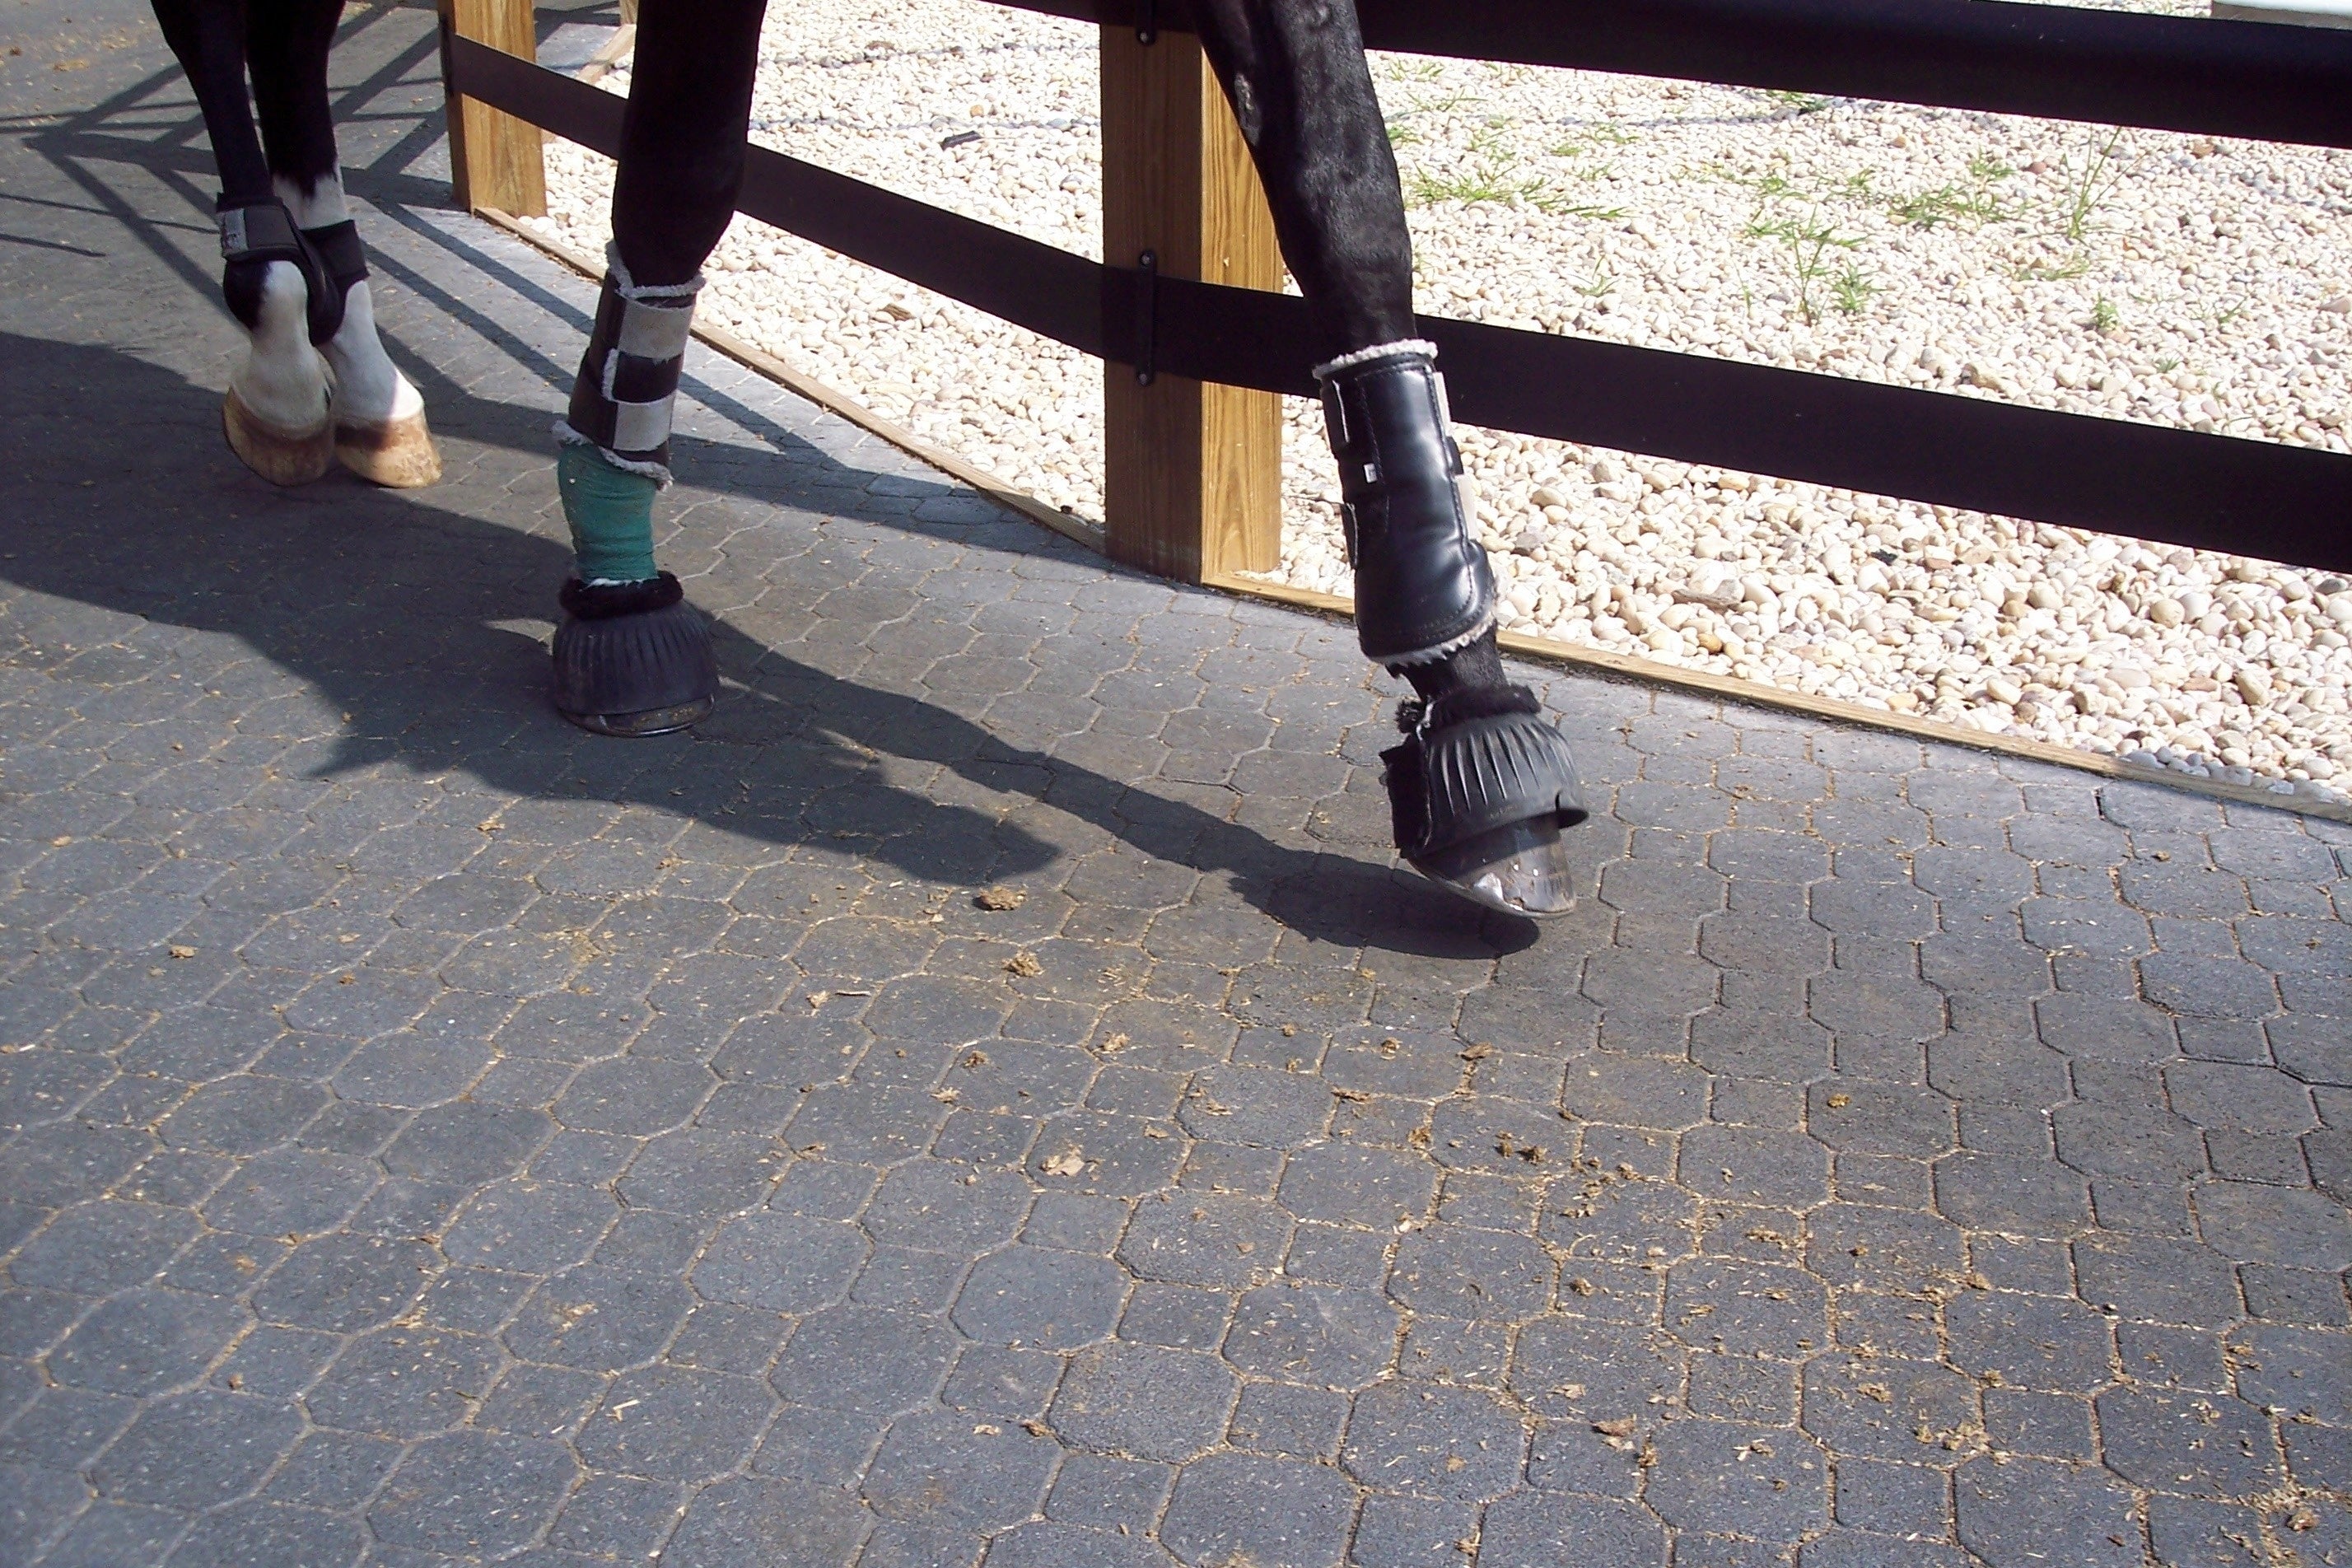 Horse walking on rubber interlock flooring, an idea for a horse flooring solution